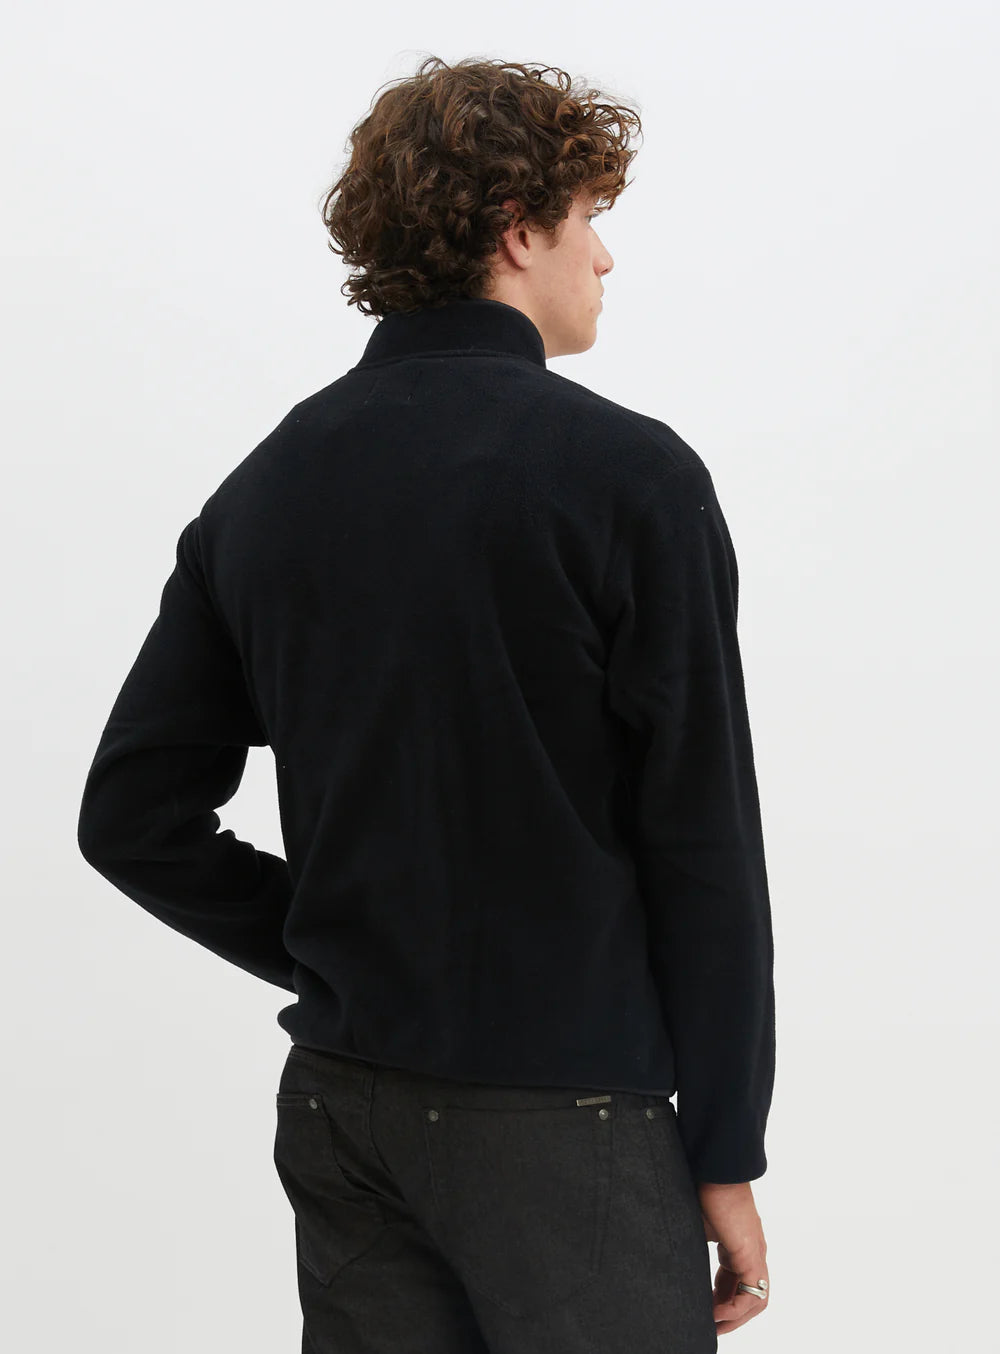 POINT ZERO-JONAS soft micro polar pullover fleece-BLACK